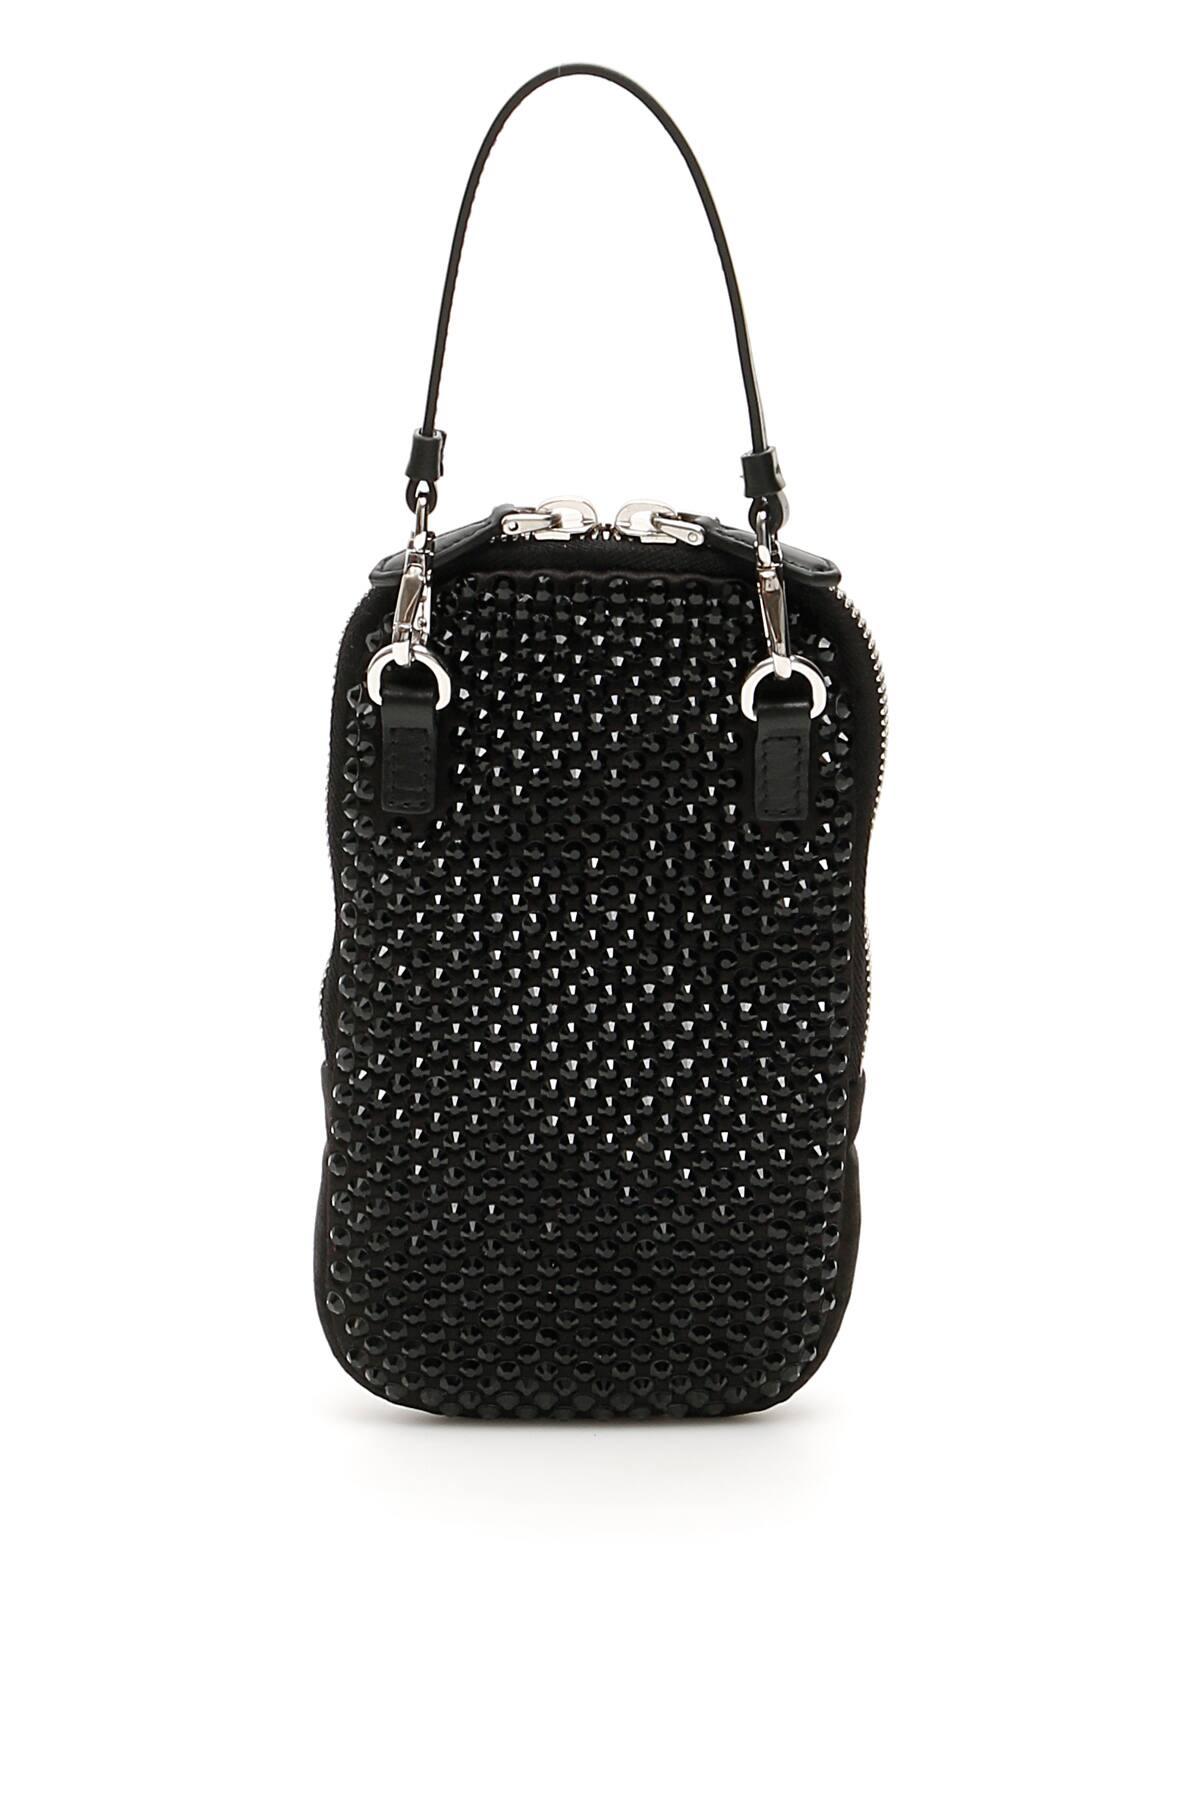 Prada Crystal Mini Bag in Black